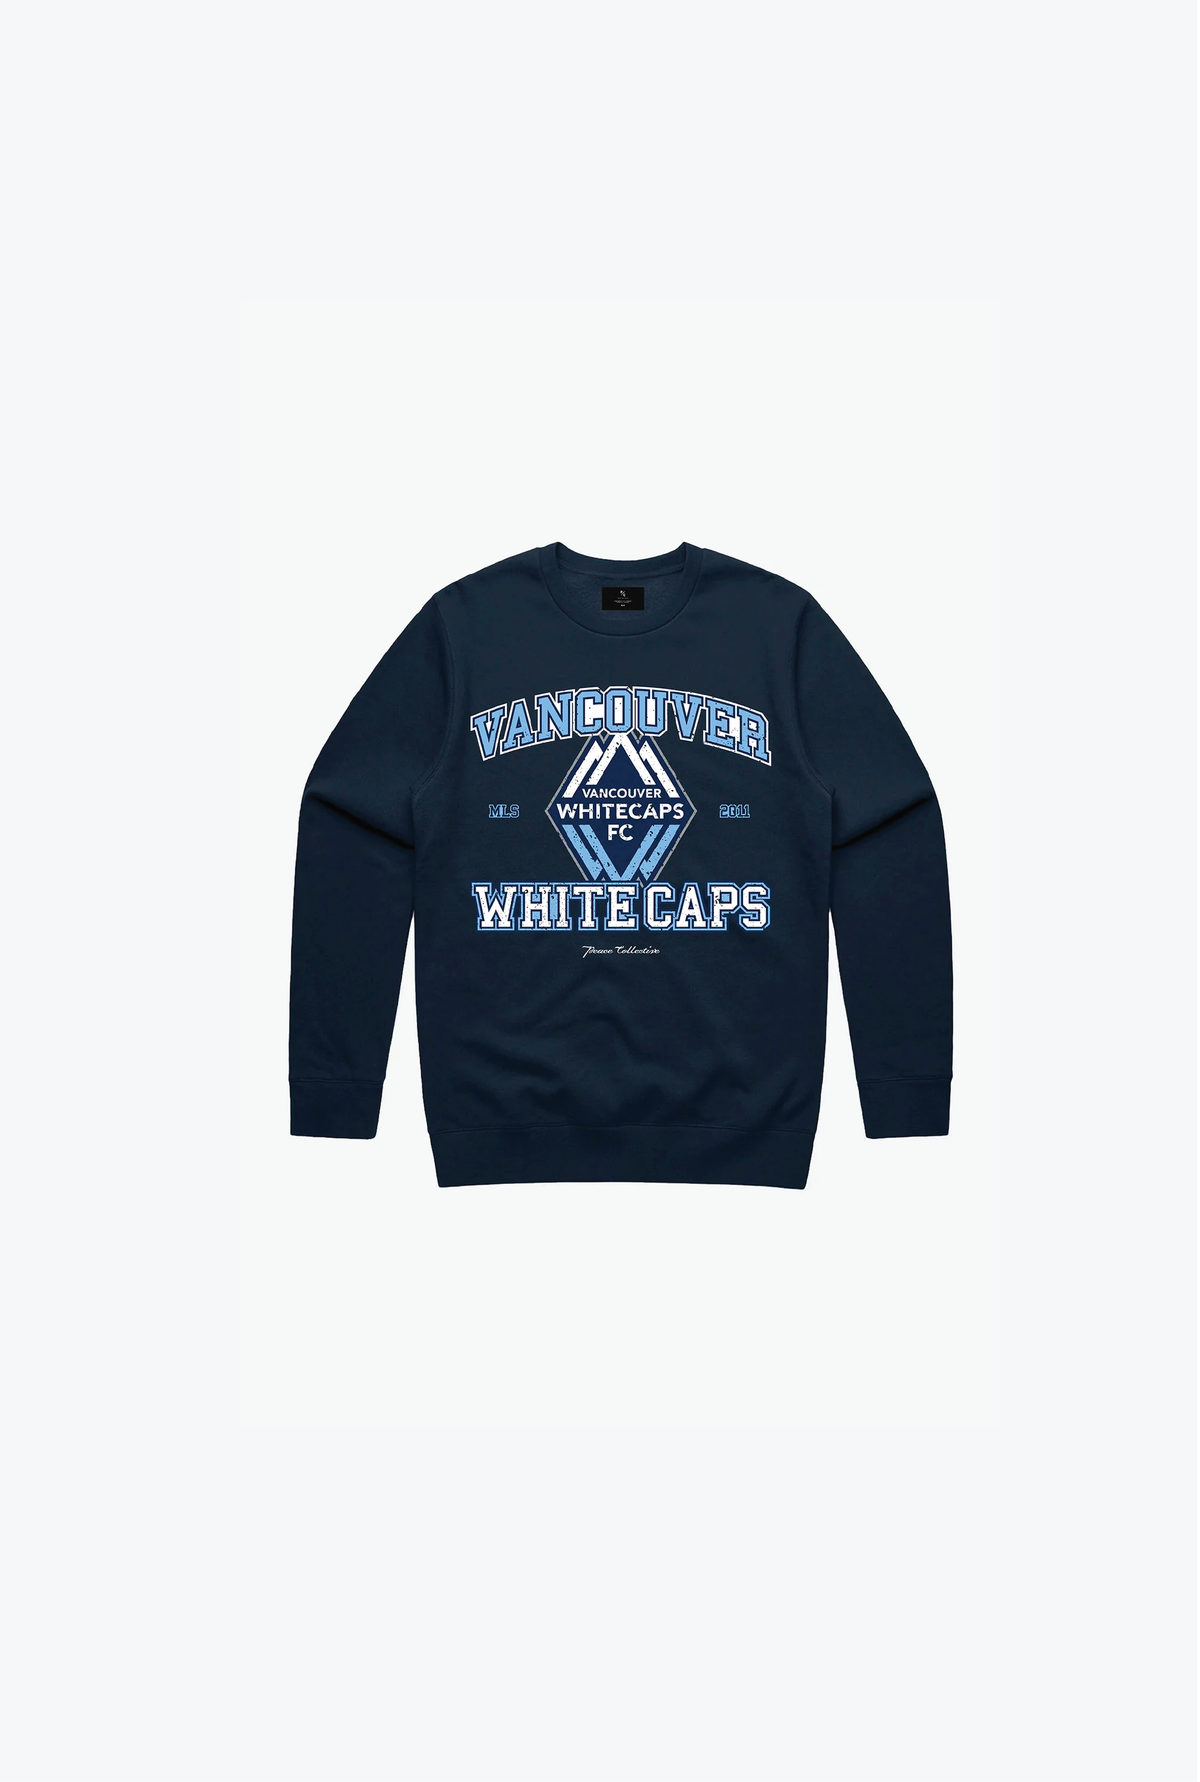 Vancouver Whitecaps FC Vintage Washed Kids Crewneck - Navy